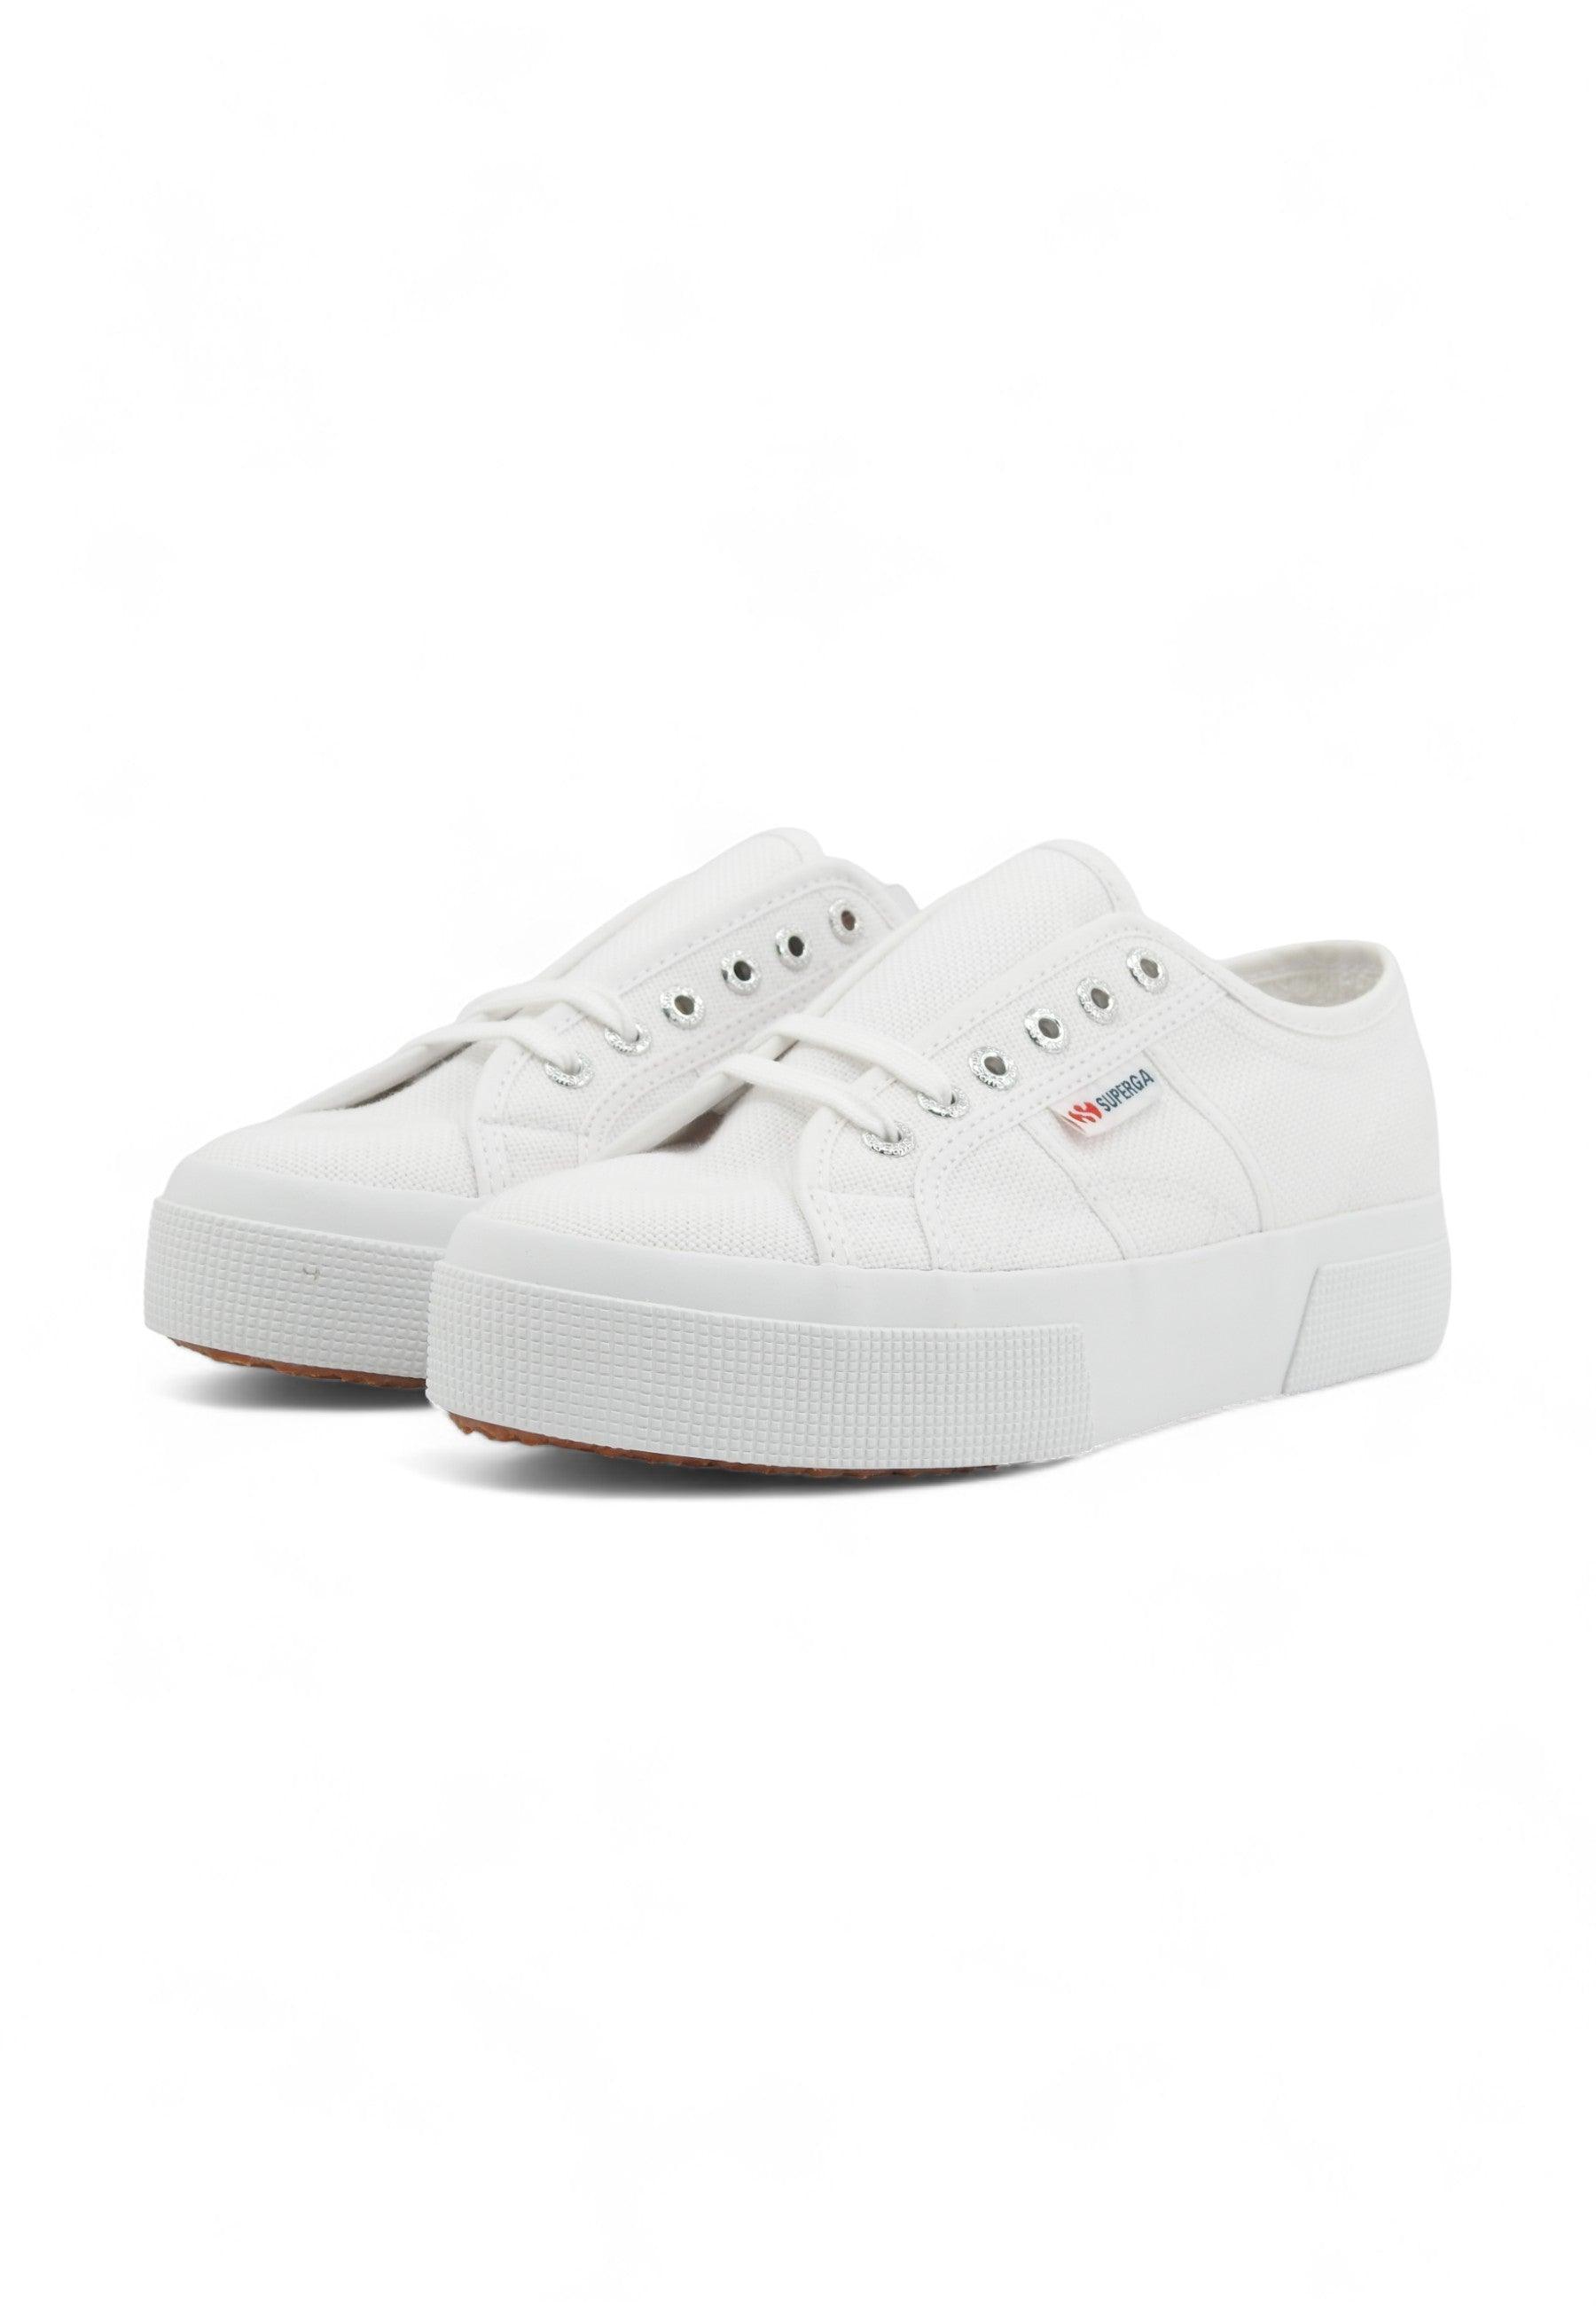 SUPERGA 2740 Platform Sneaker Donna White S21384W - Sandrini Calzature e Abbigliamento